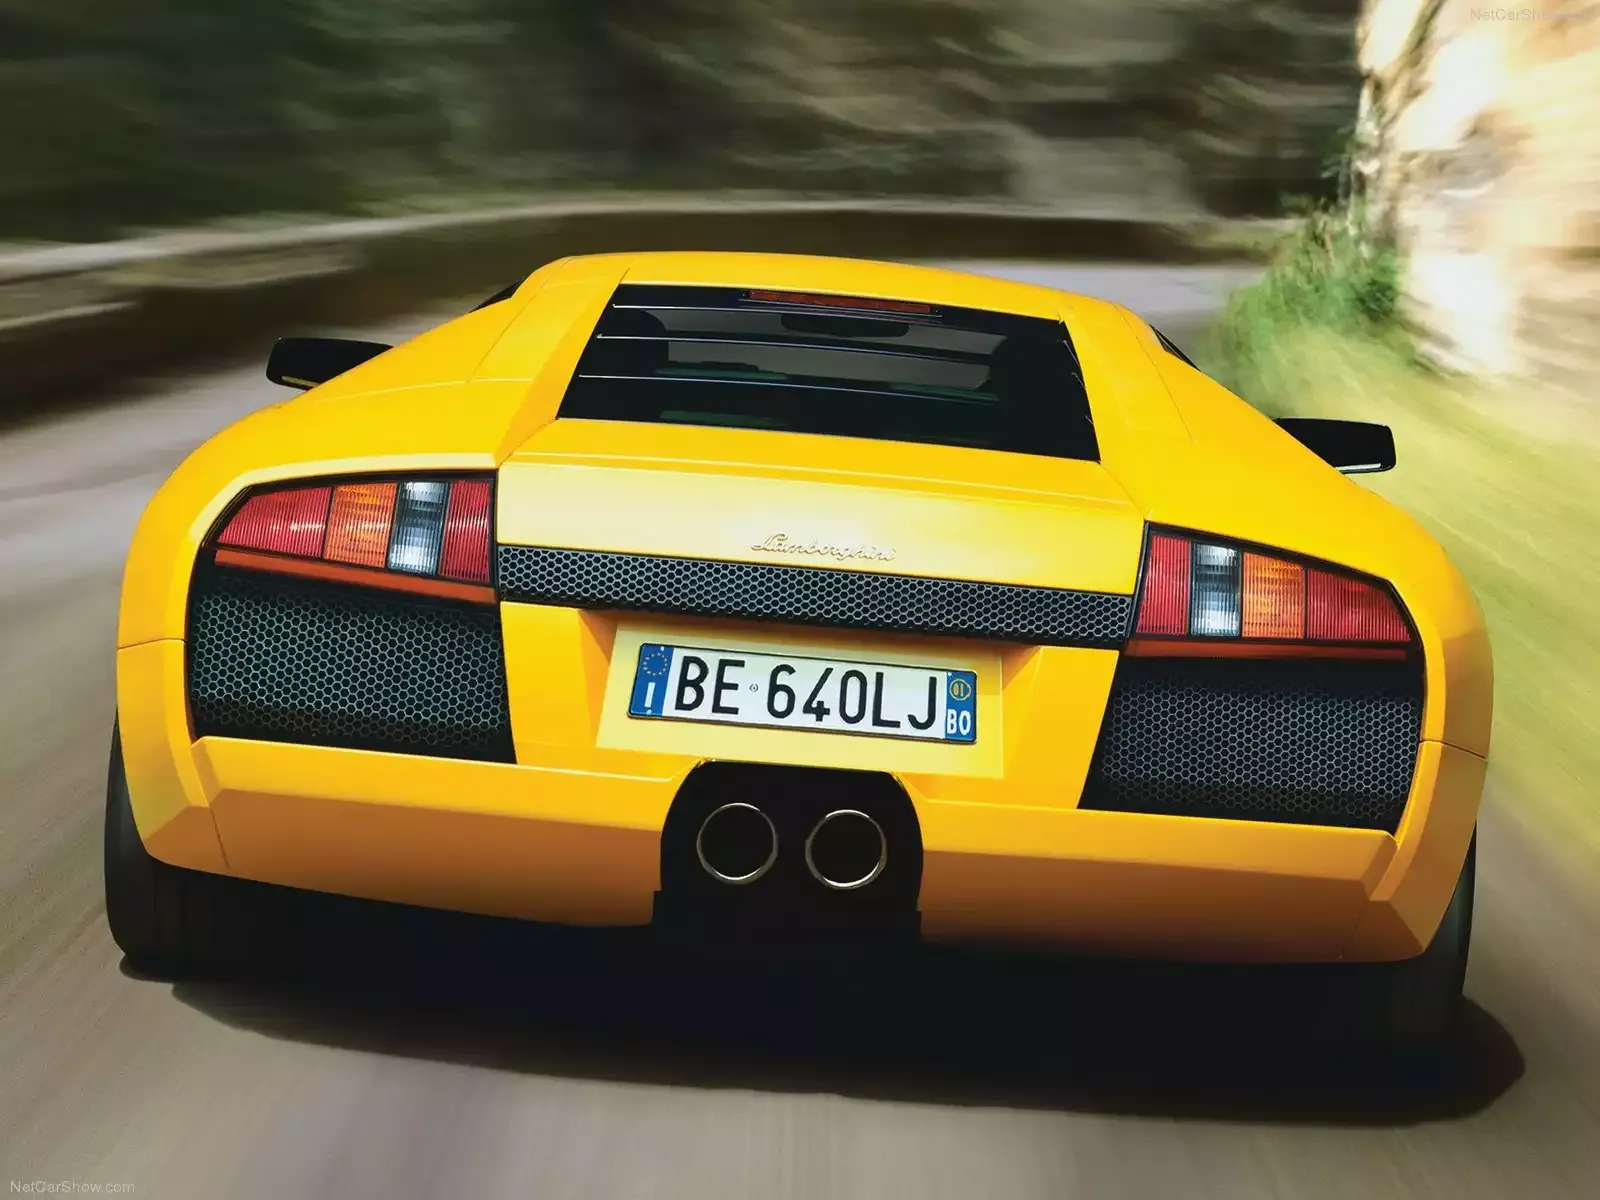 Hình ảnh siêu xe Lamborghini Murcielago 2002 & nội ngoại thất